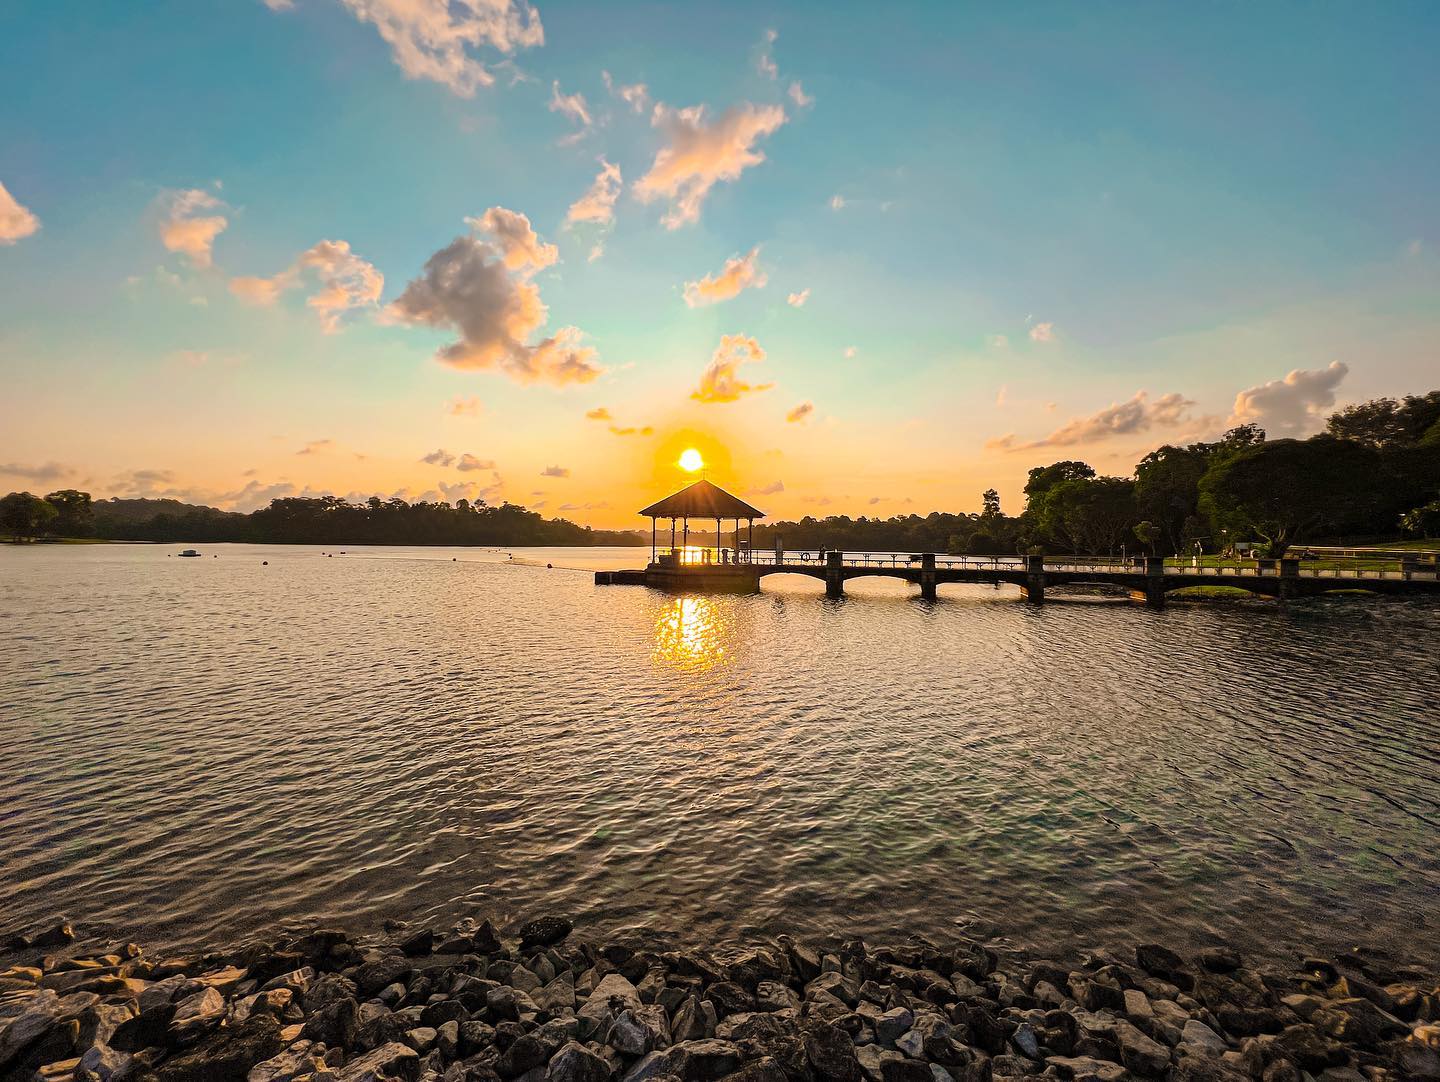 Sunrise & sunset spots in Singapore - Lower Peirce Reservoir Park pavilion sunset